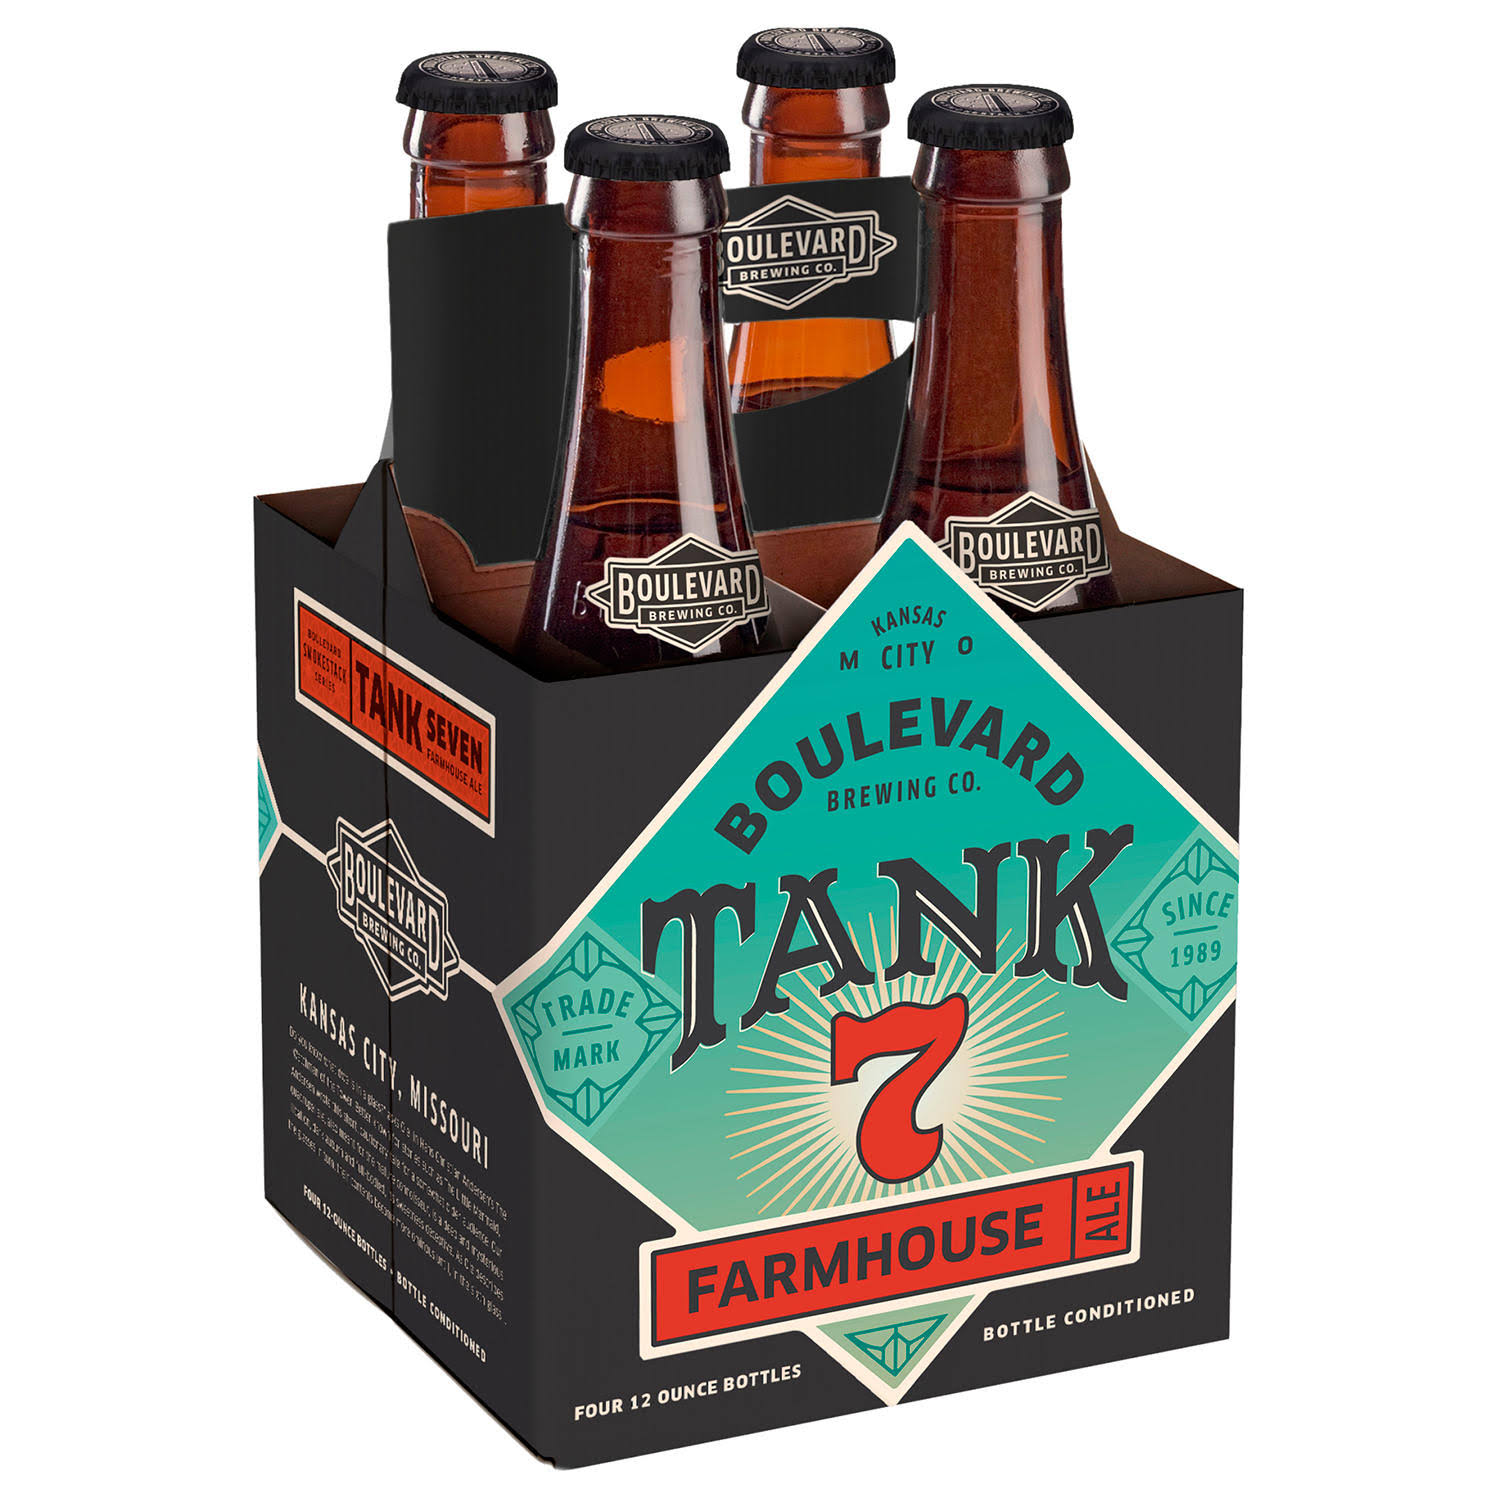 Boulevard Beer, American Saison Ale, Tank 7 - six - 12 ounce bottles